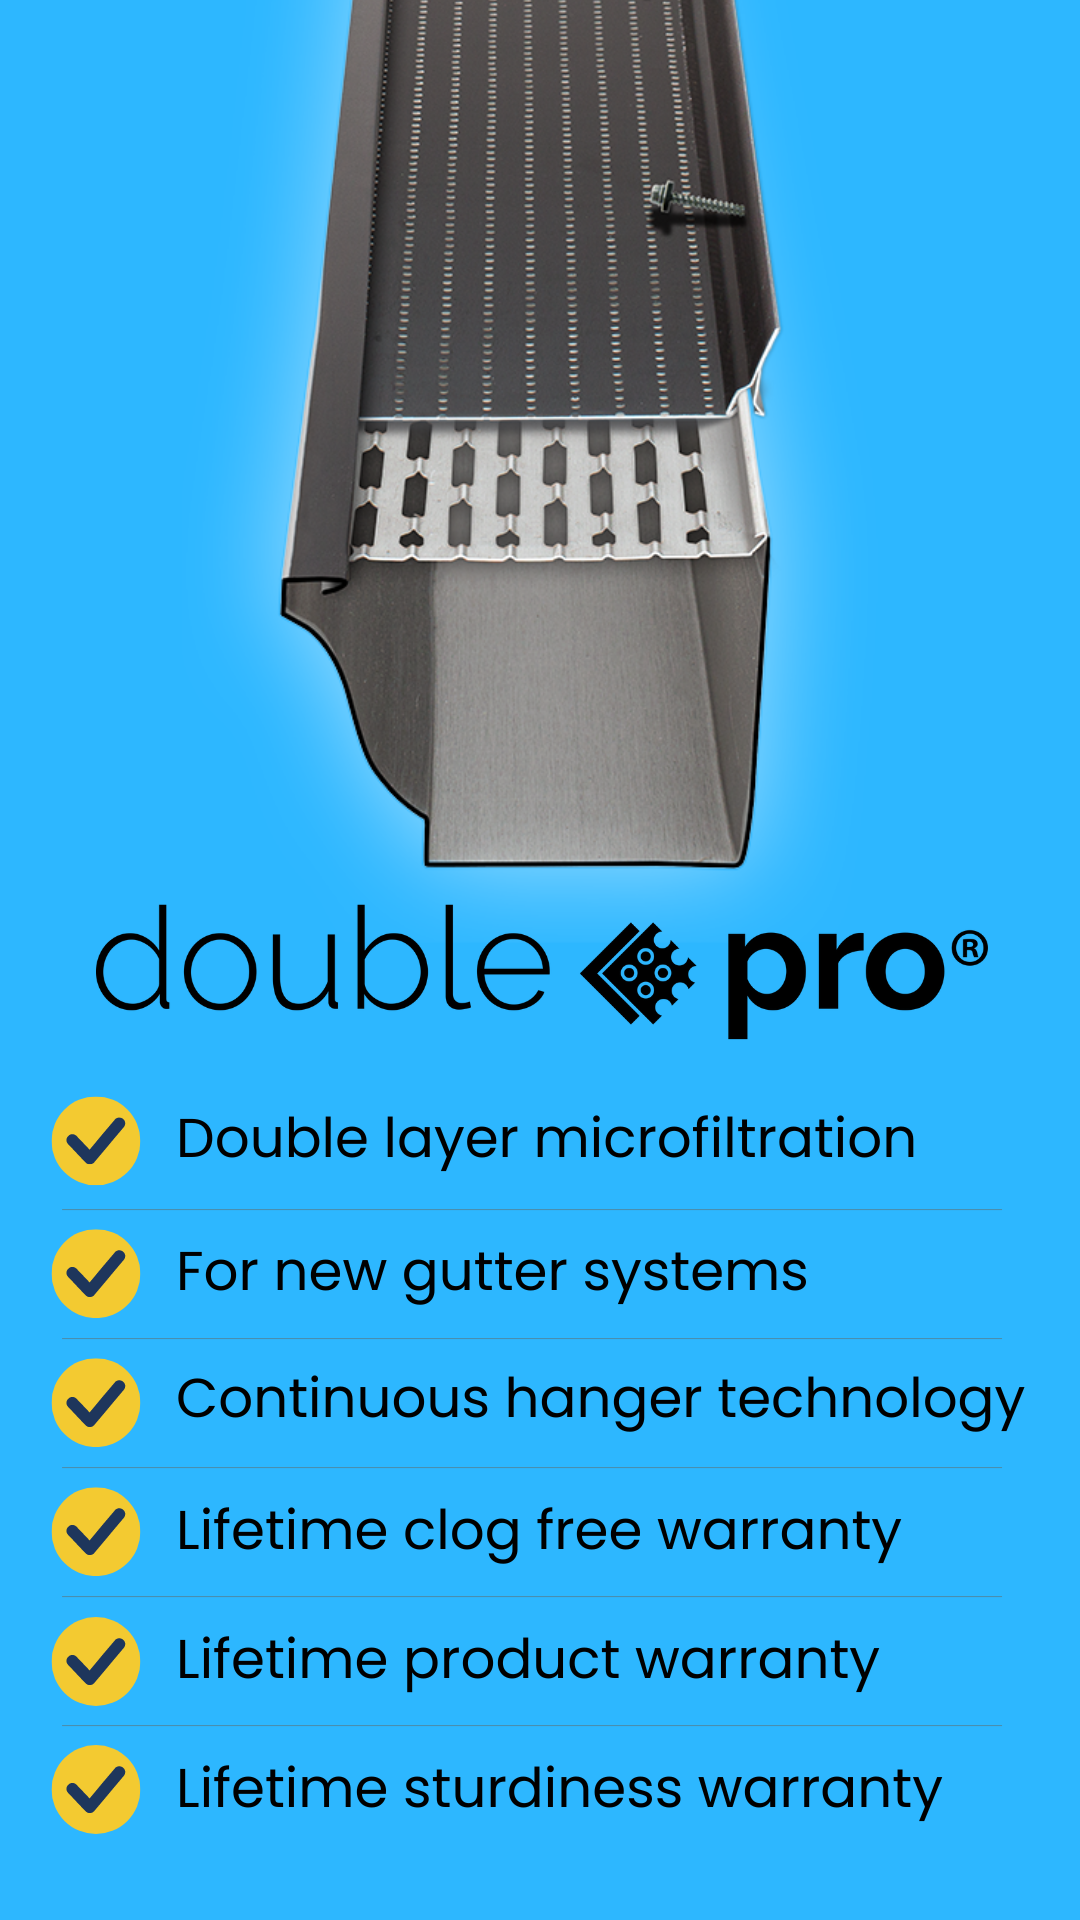 double-pro gutter cover product comparison image